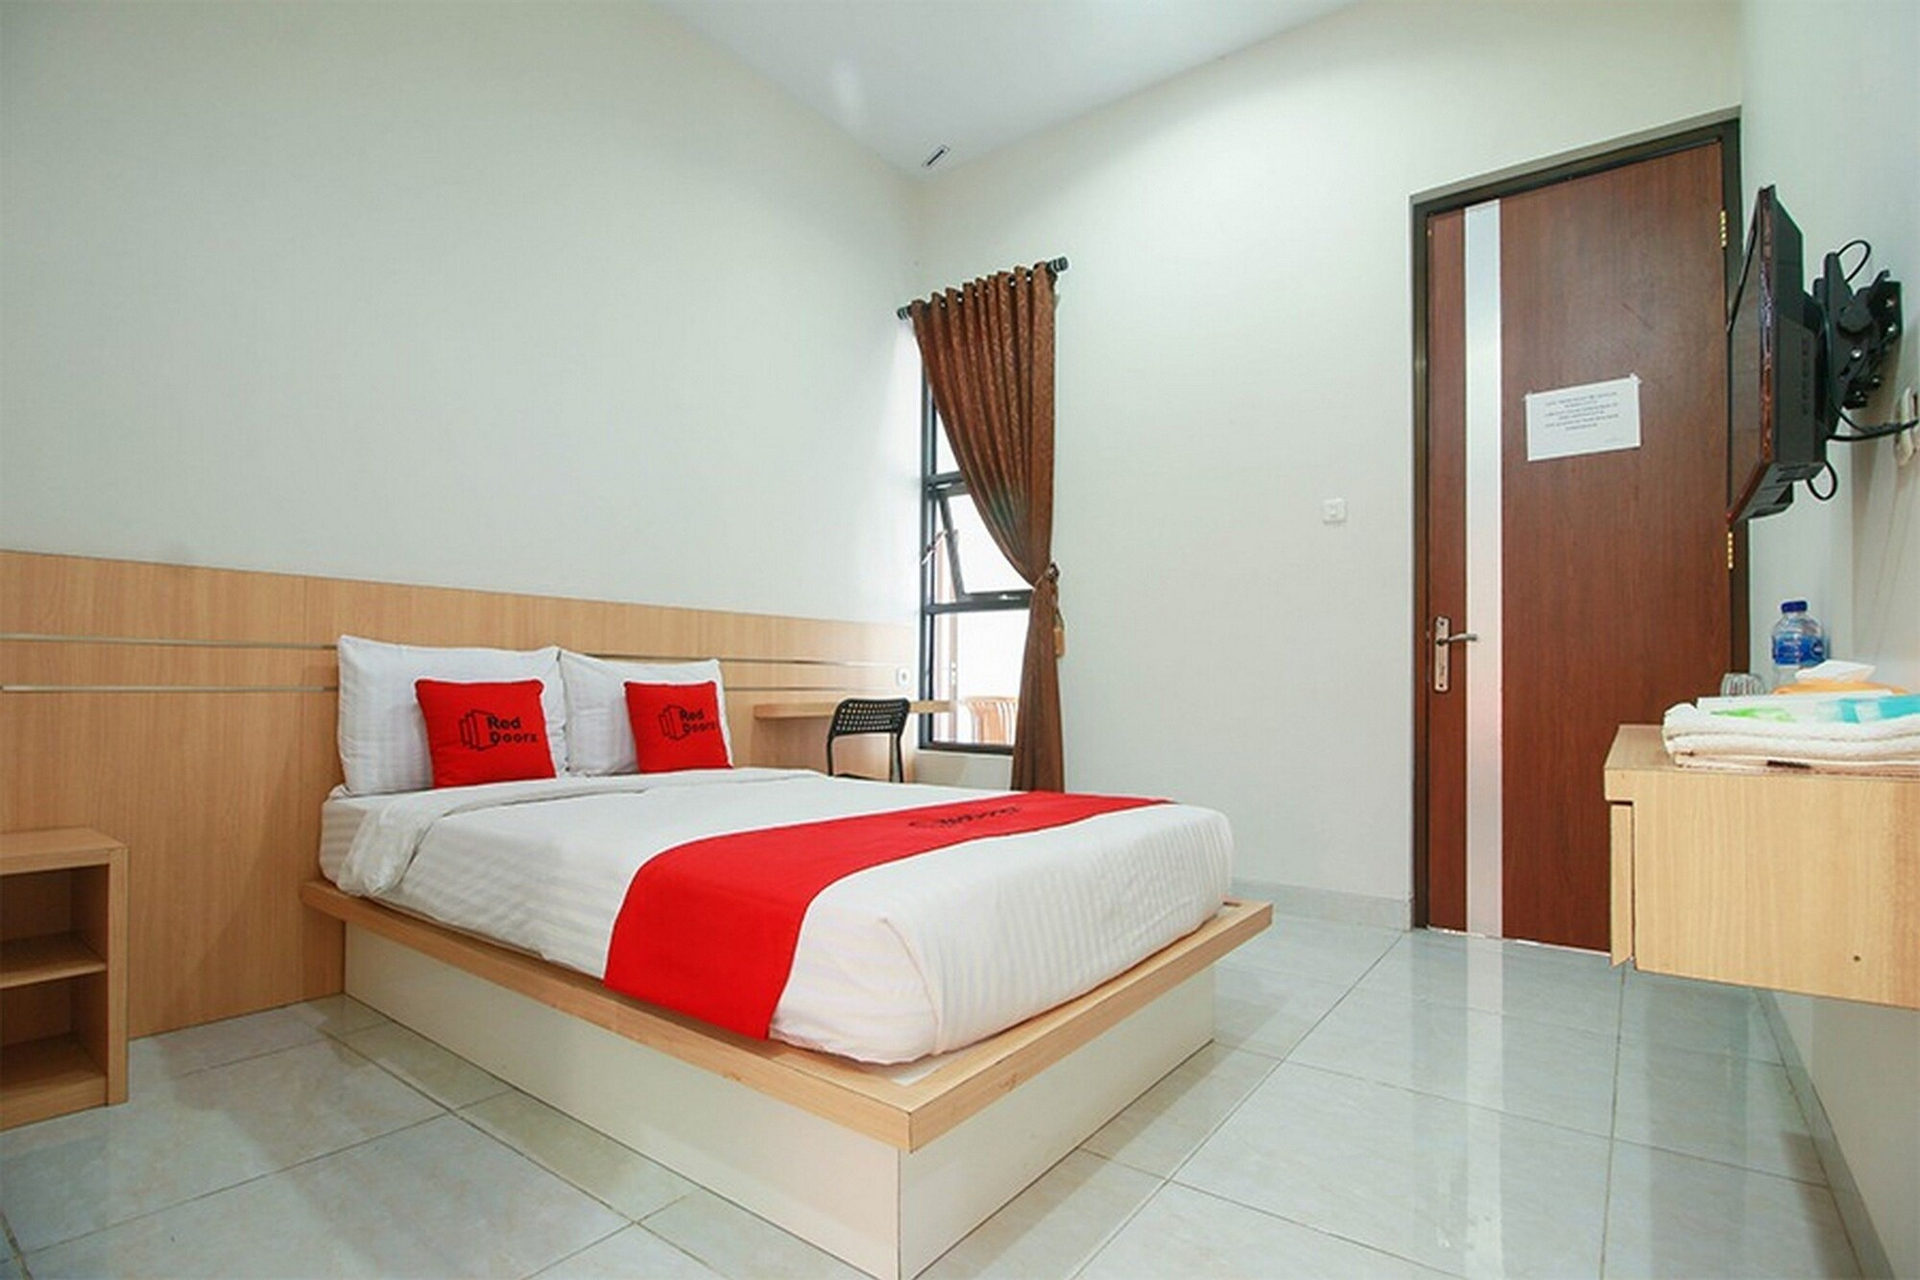 Bedroom 3, RedDoorz Syariah near Universitas Jenderal Soedirman, Banyumas